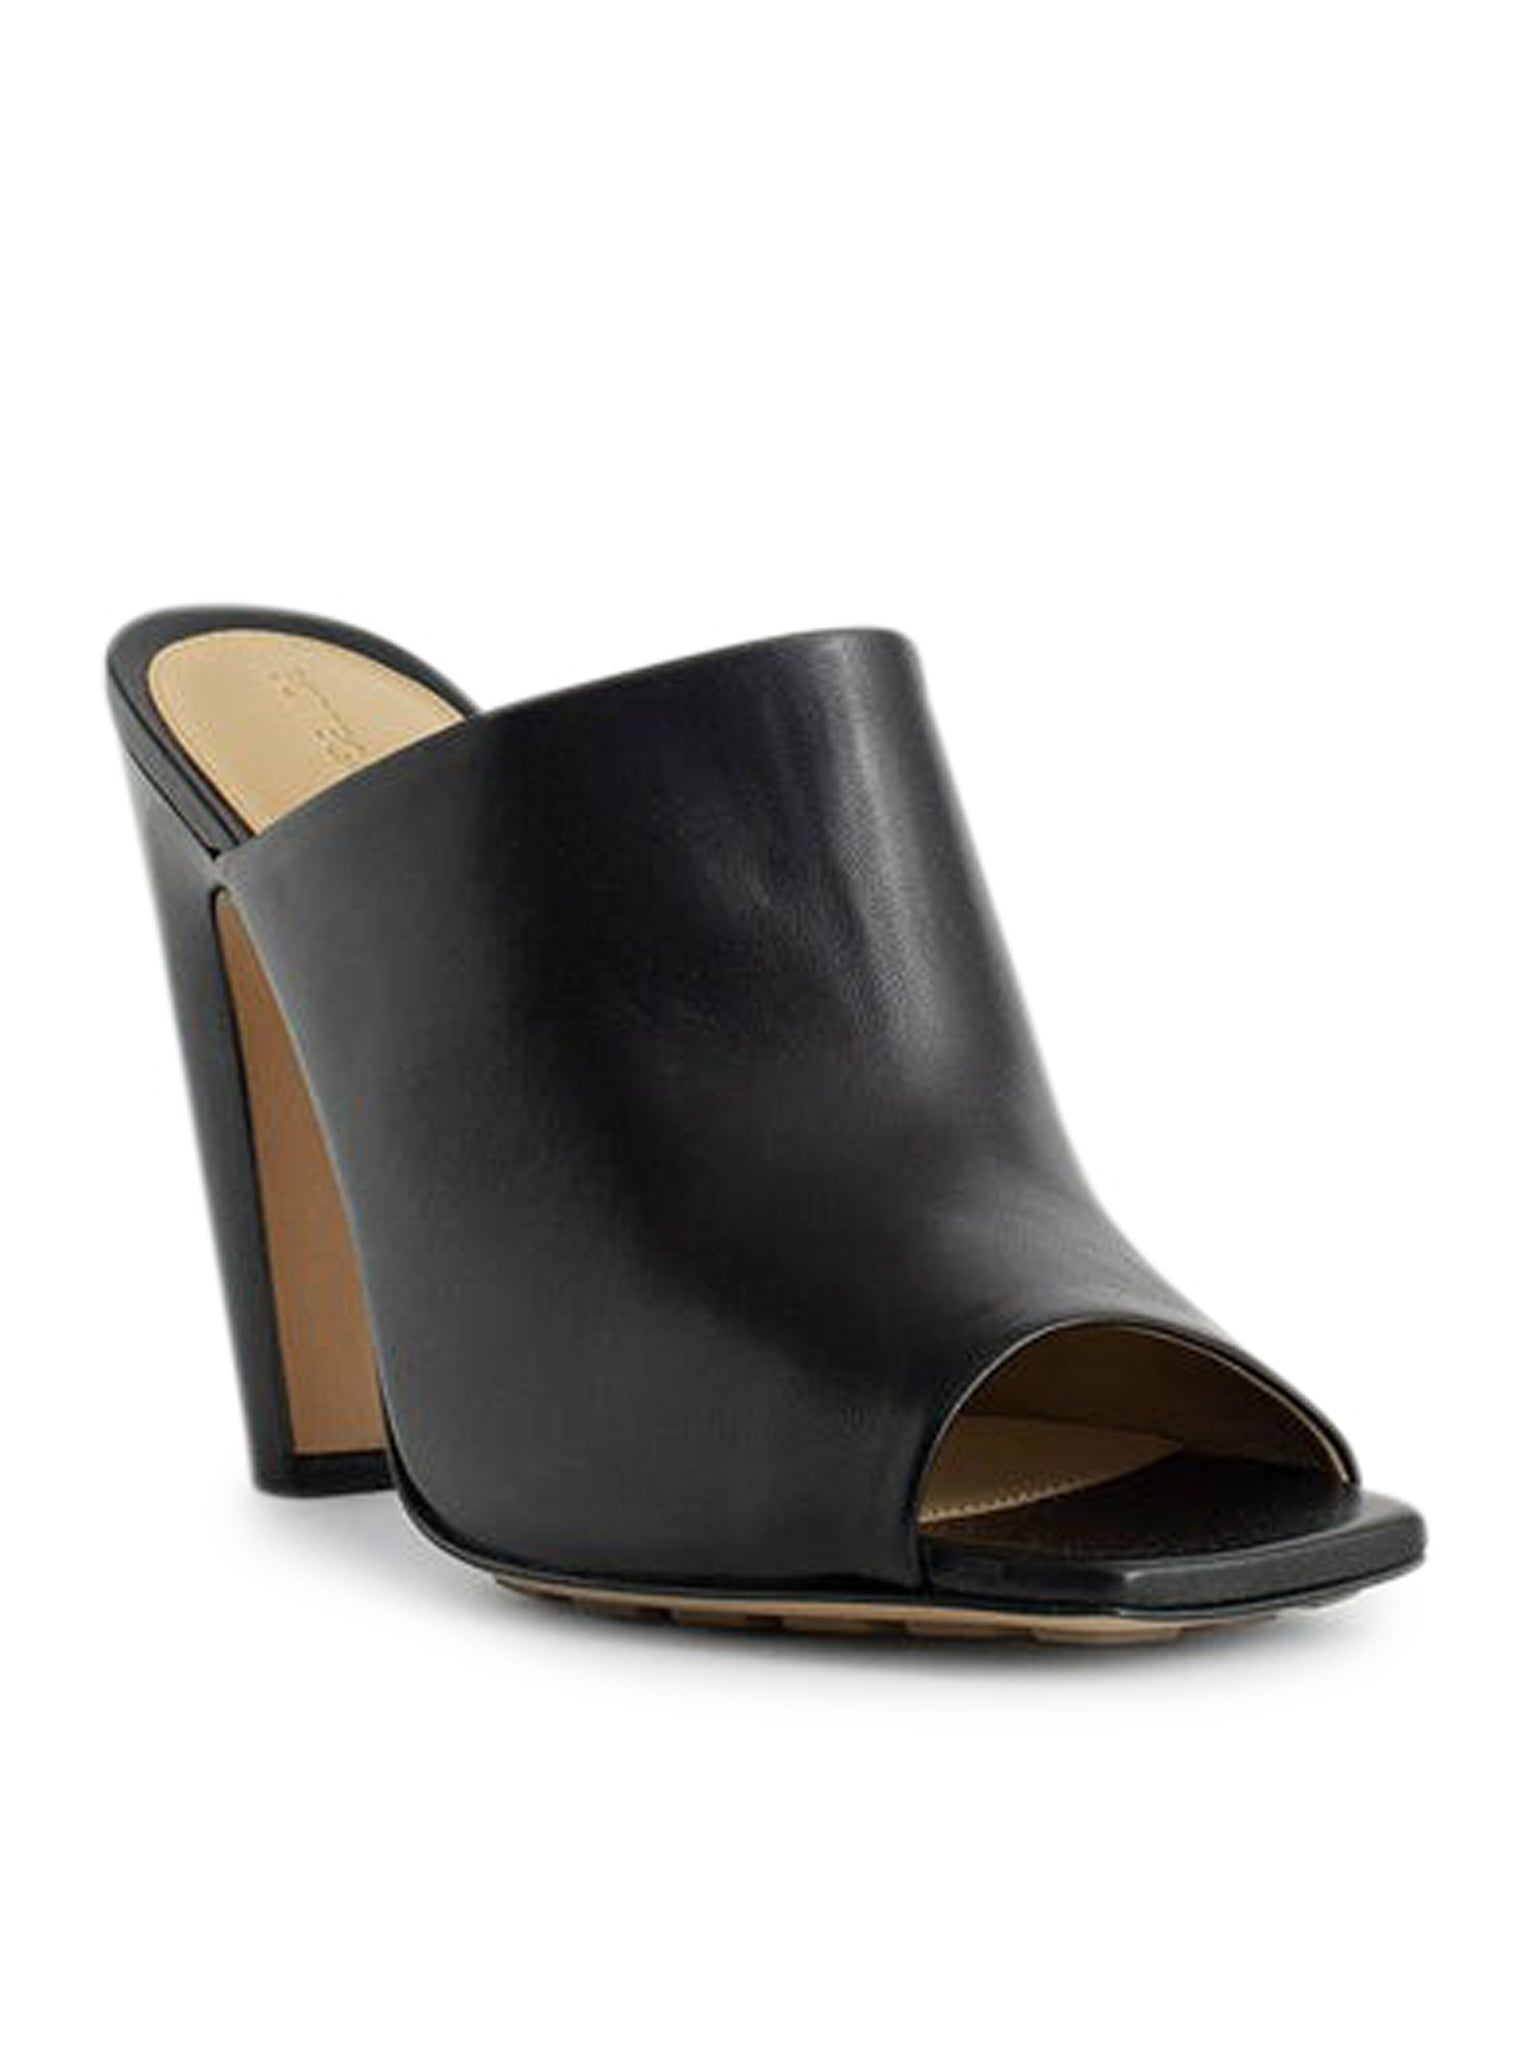 Canalazzo sandals in black nappa leather